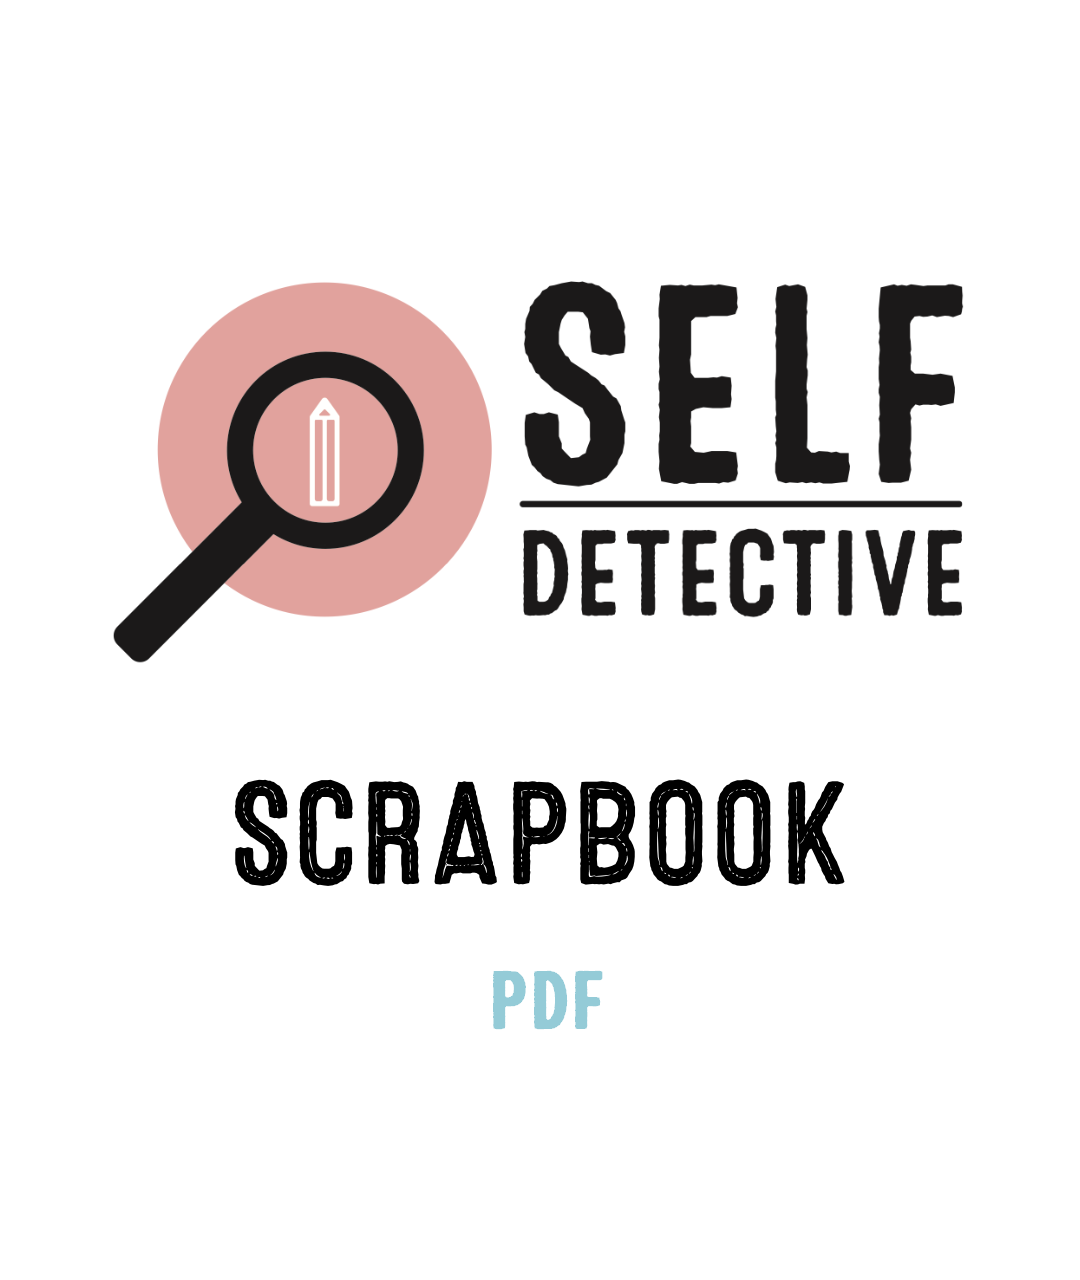 Scrapbook (PDF version)